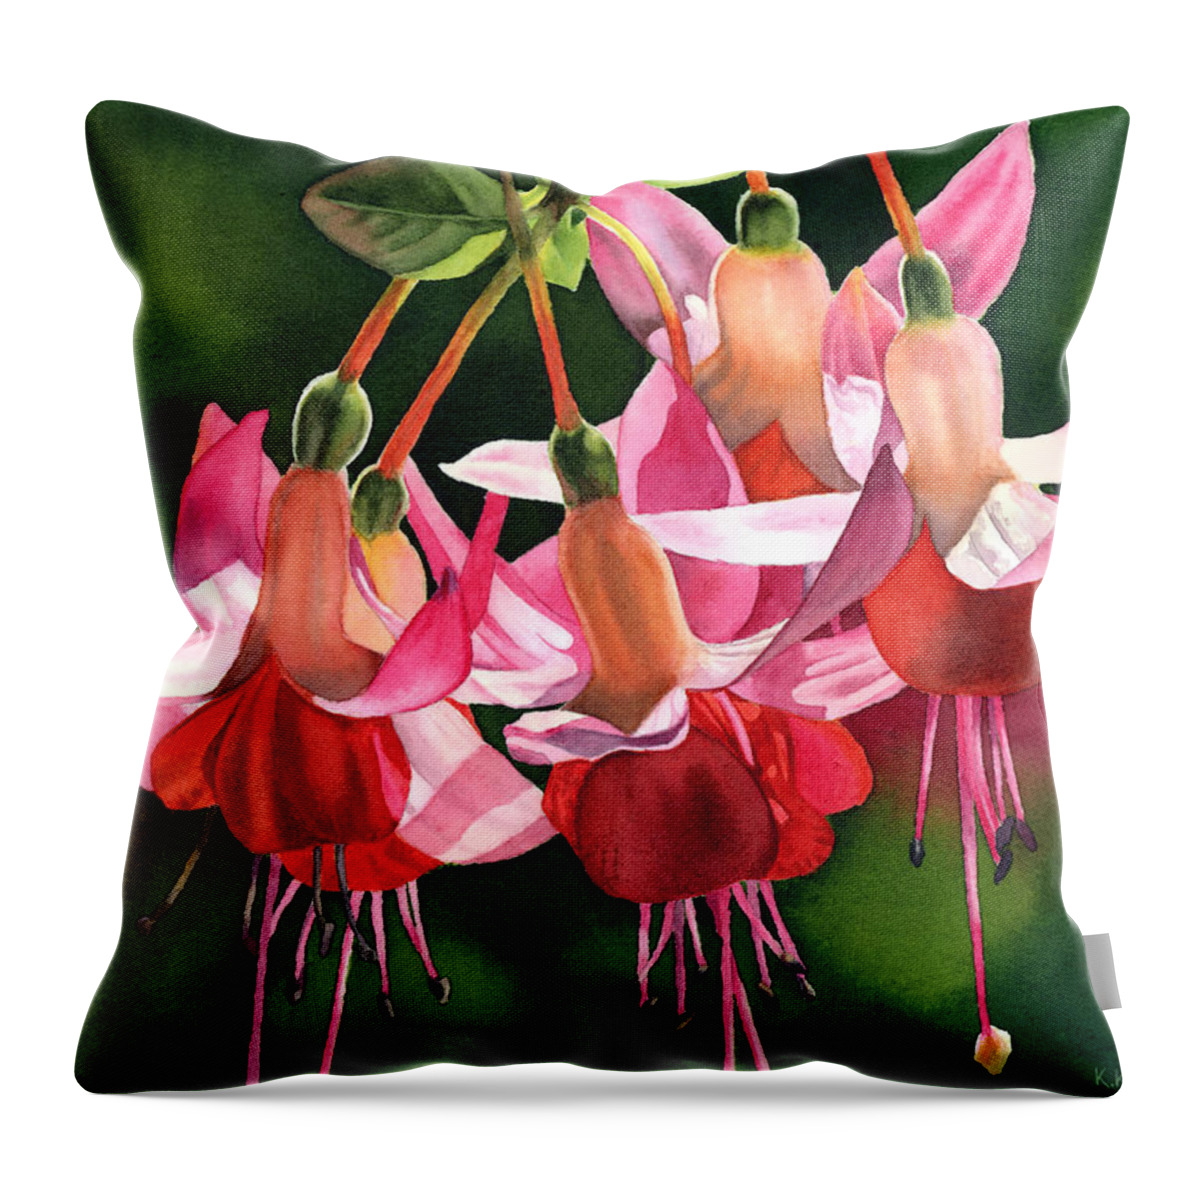 Fuchsia Throw Pillow featuring the painting Fuchsia by Espero Art